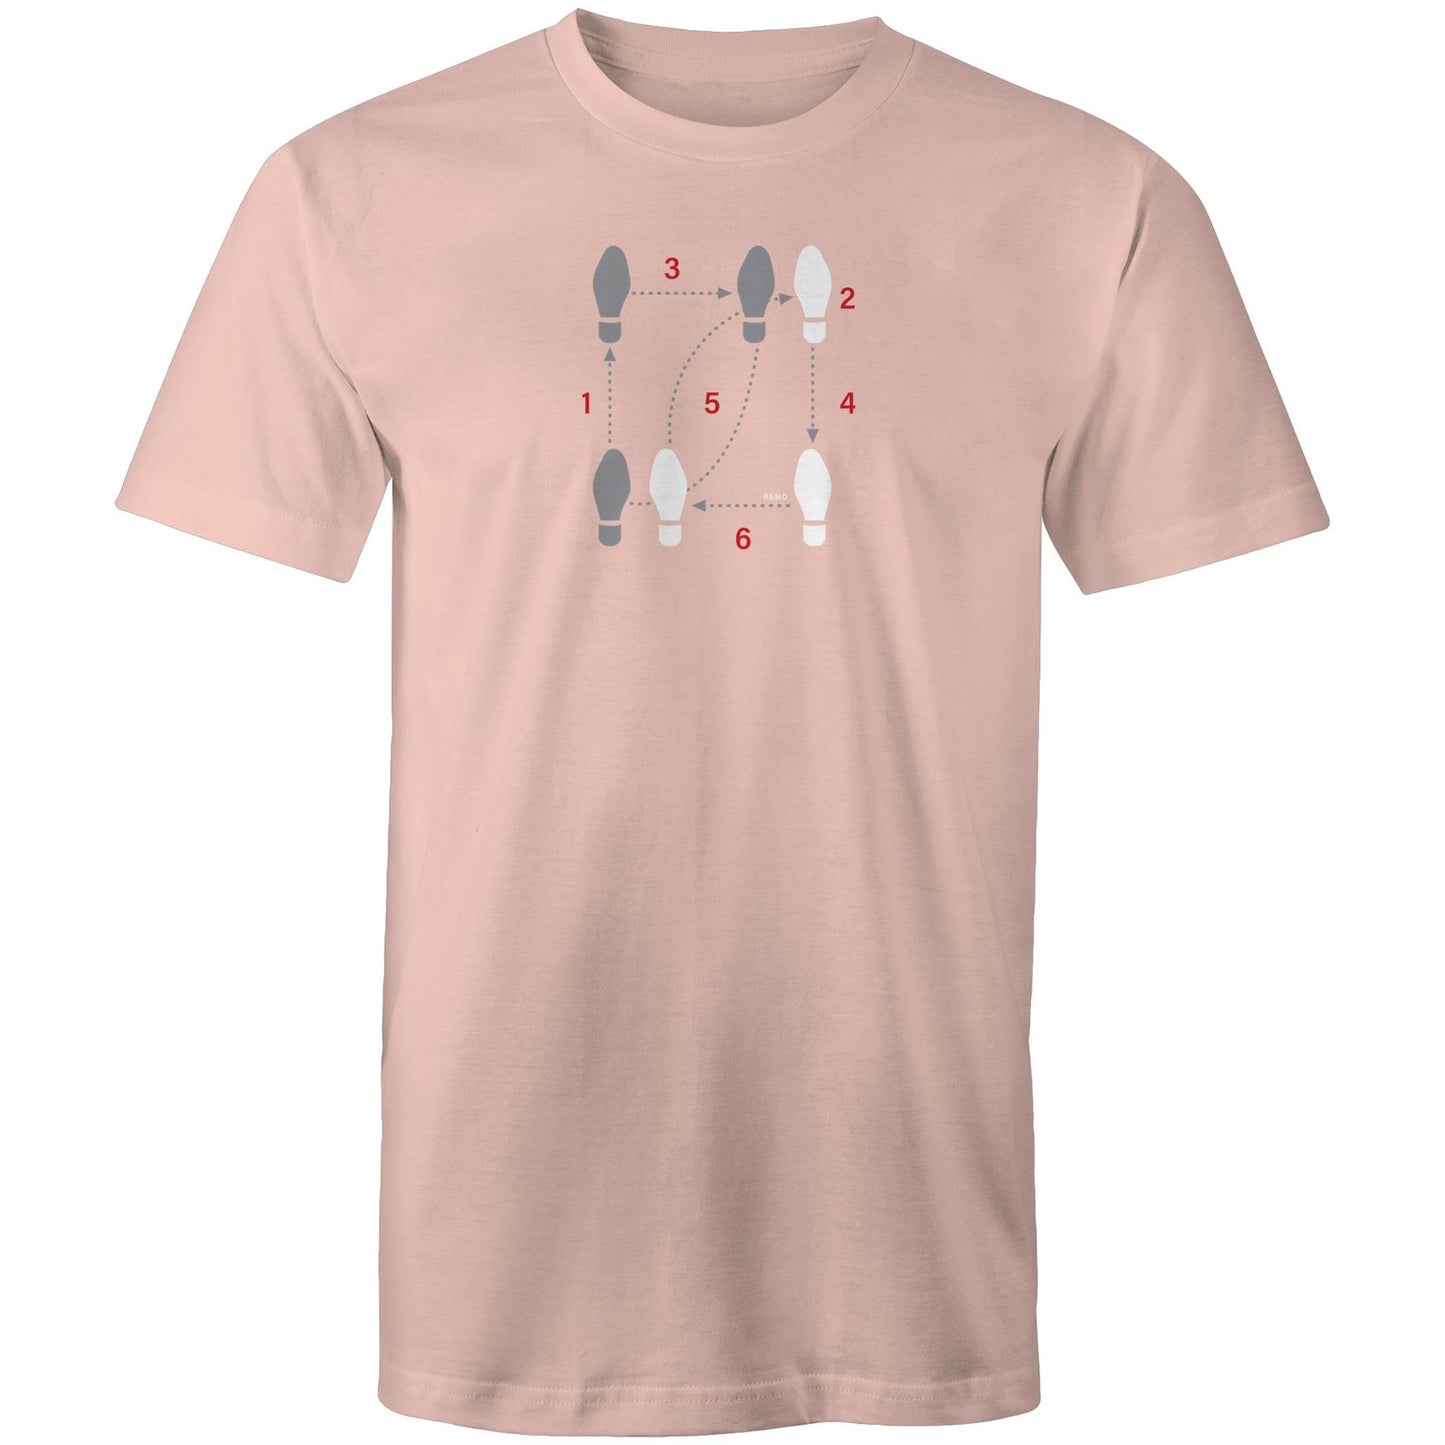 Box Step T Shirts for Men (Unisex)